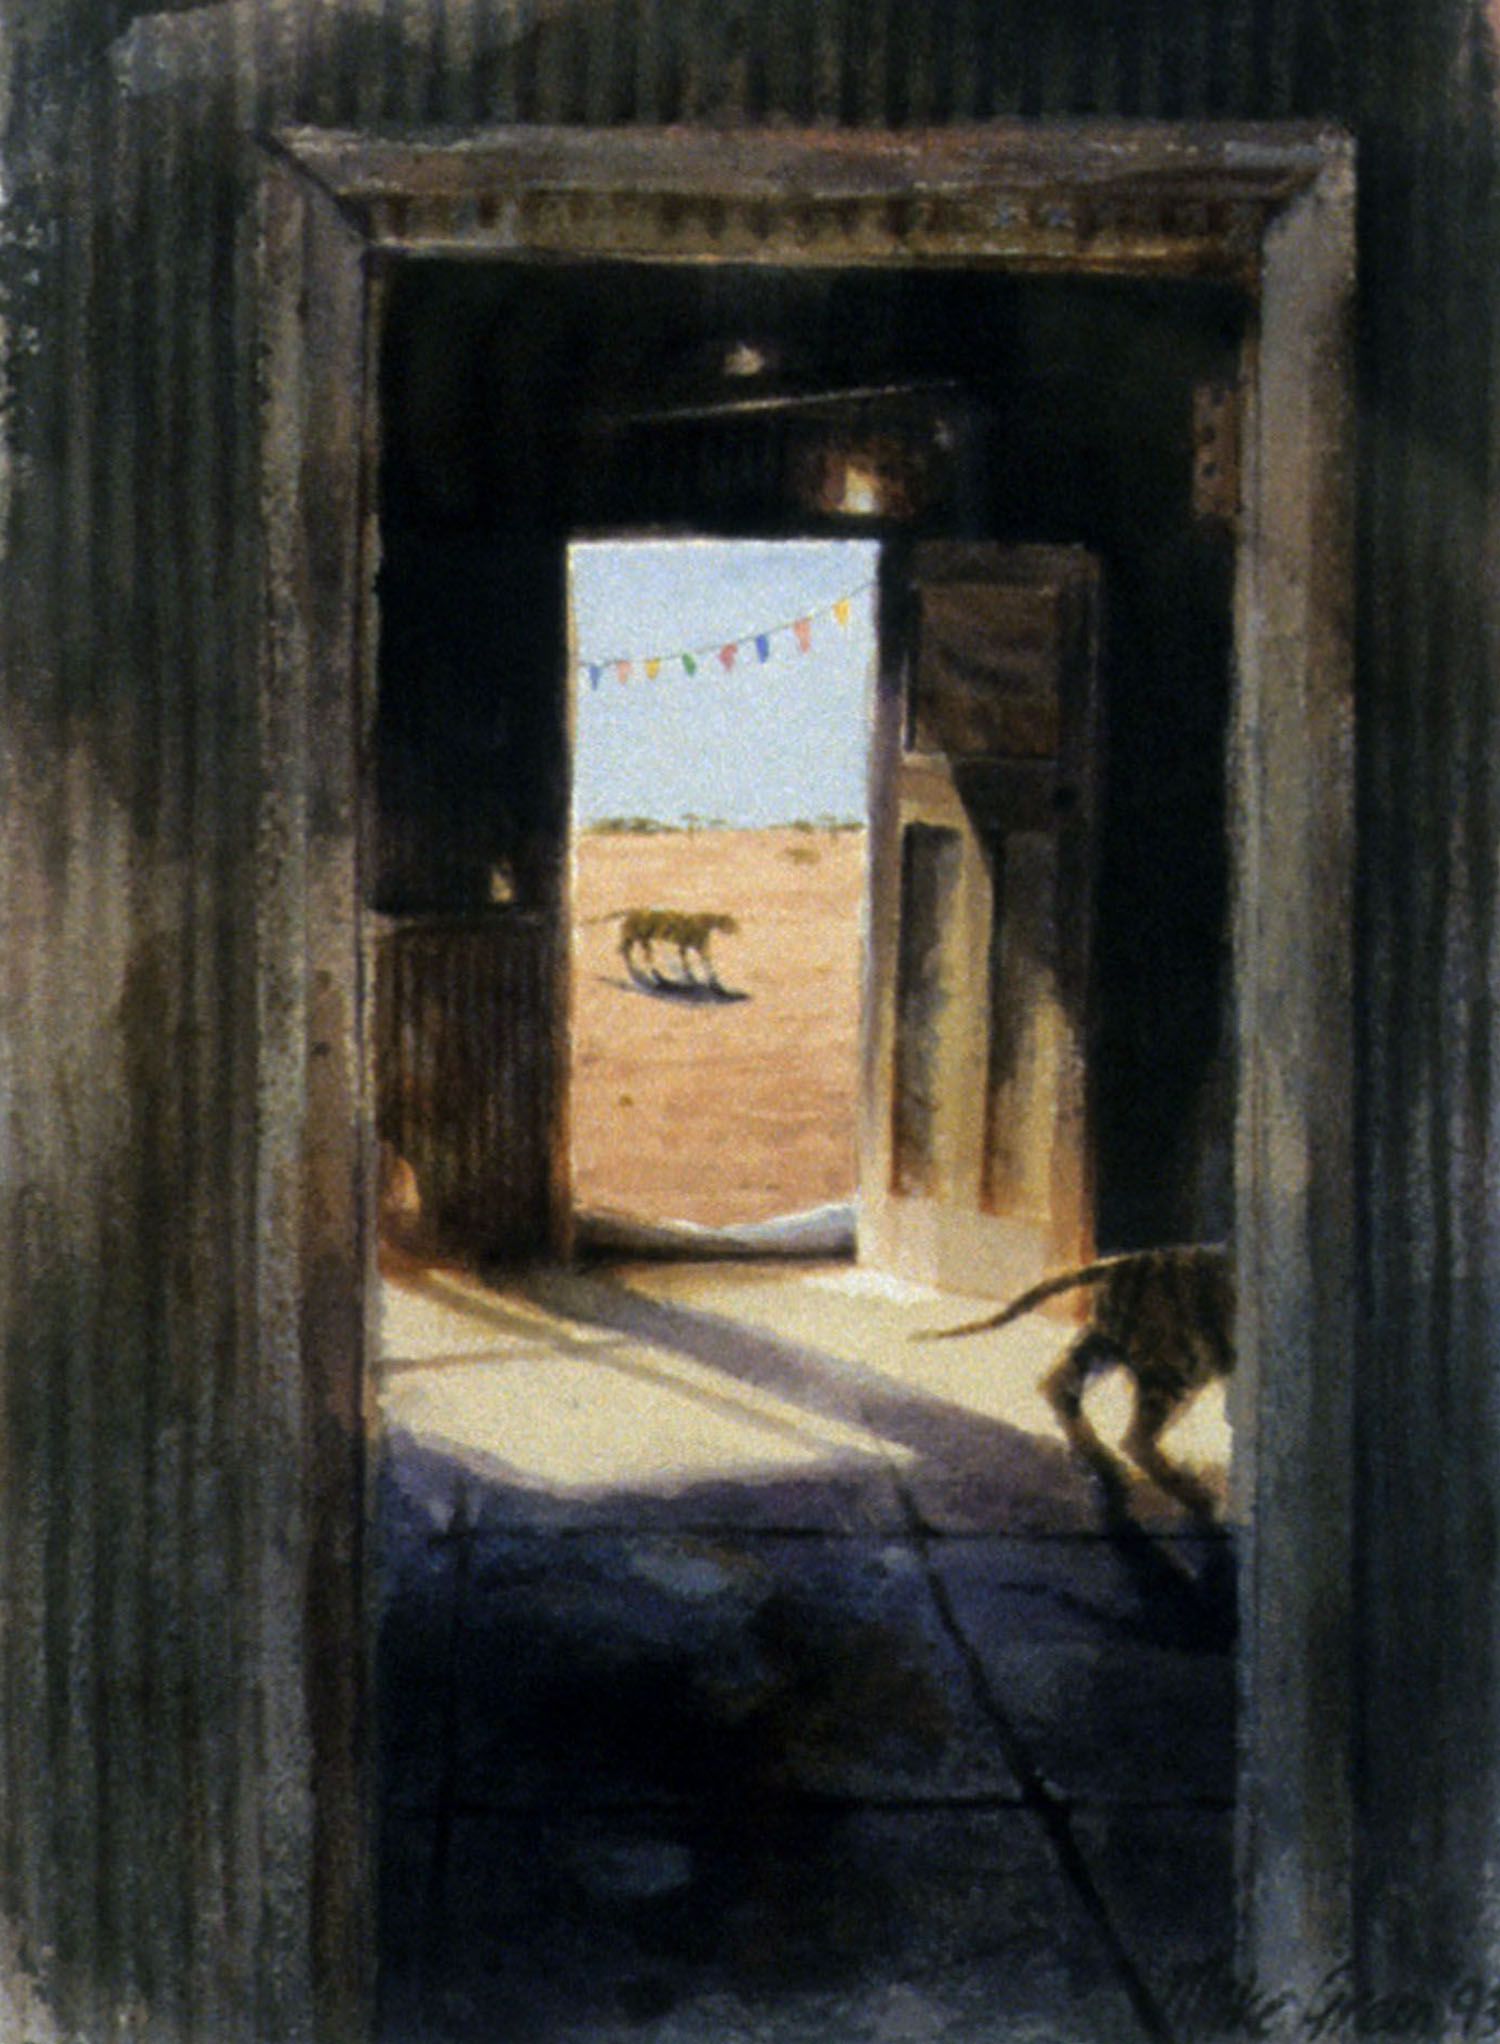 "The Tigers" 1994. 30 x 22cm